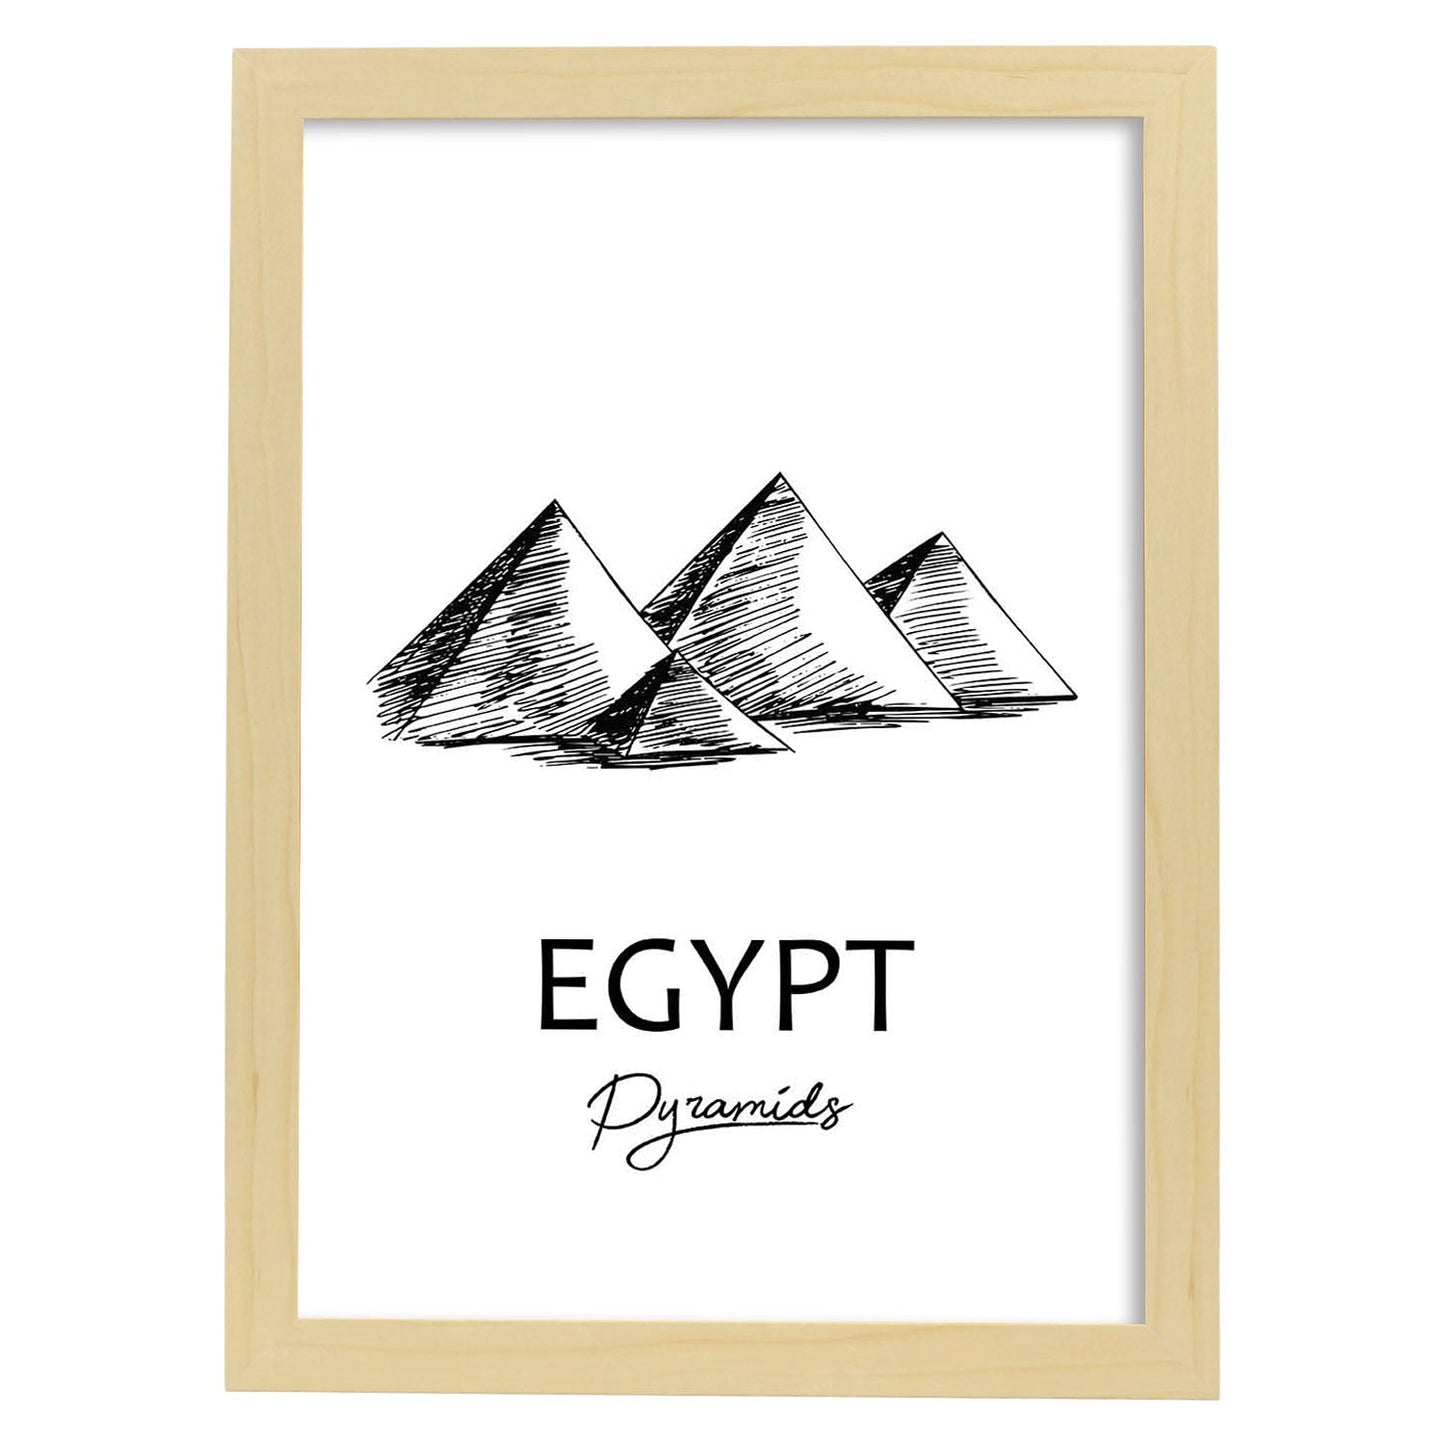 Poster de Egipto - Pirámides. Láminas con monumentos de ciudades.-Artwork-Nacnic-A3-Marco Madera clara-Nacnic Estudio SL